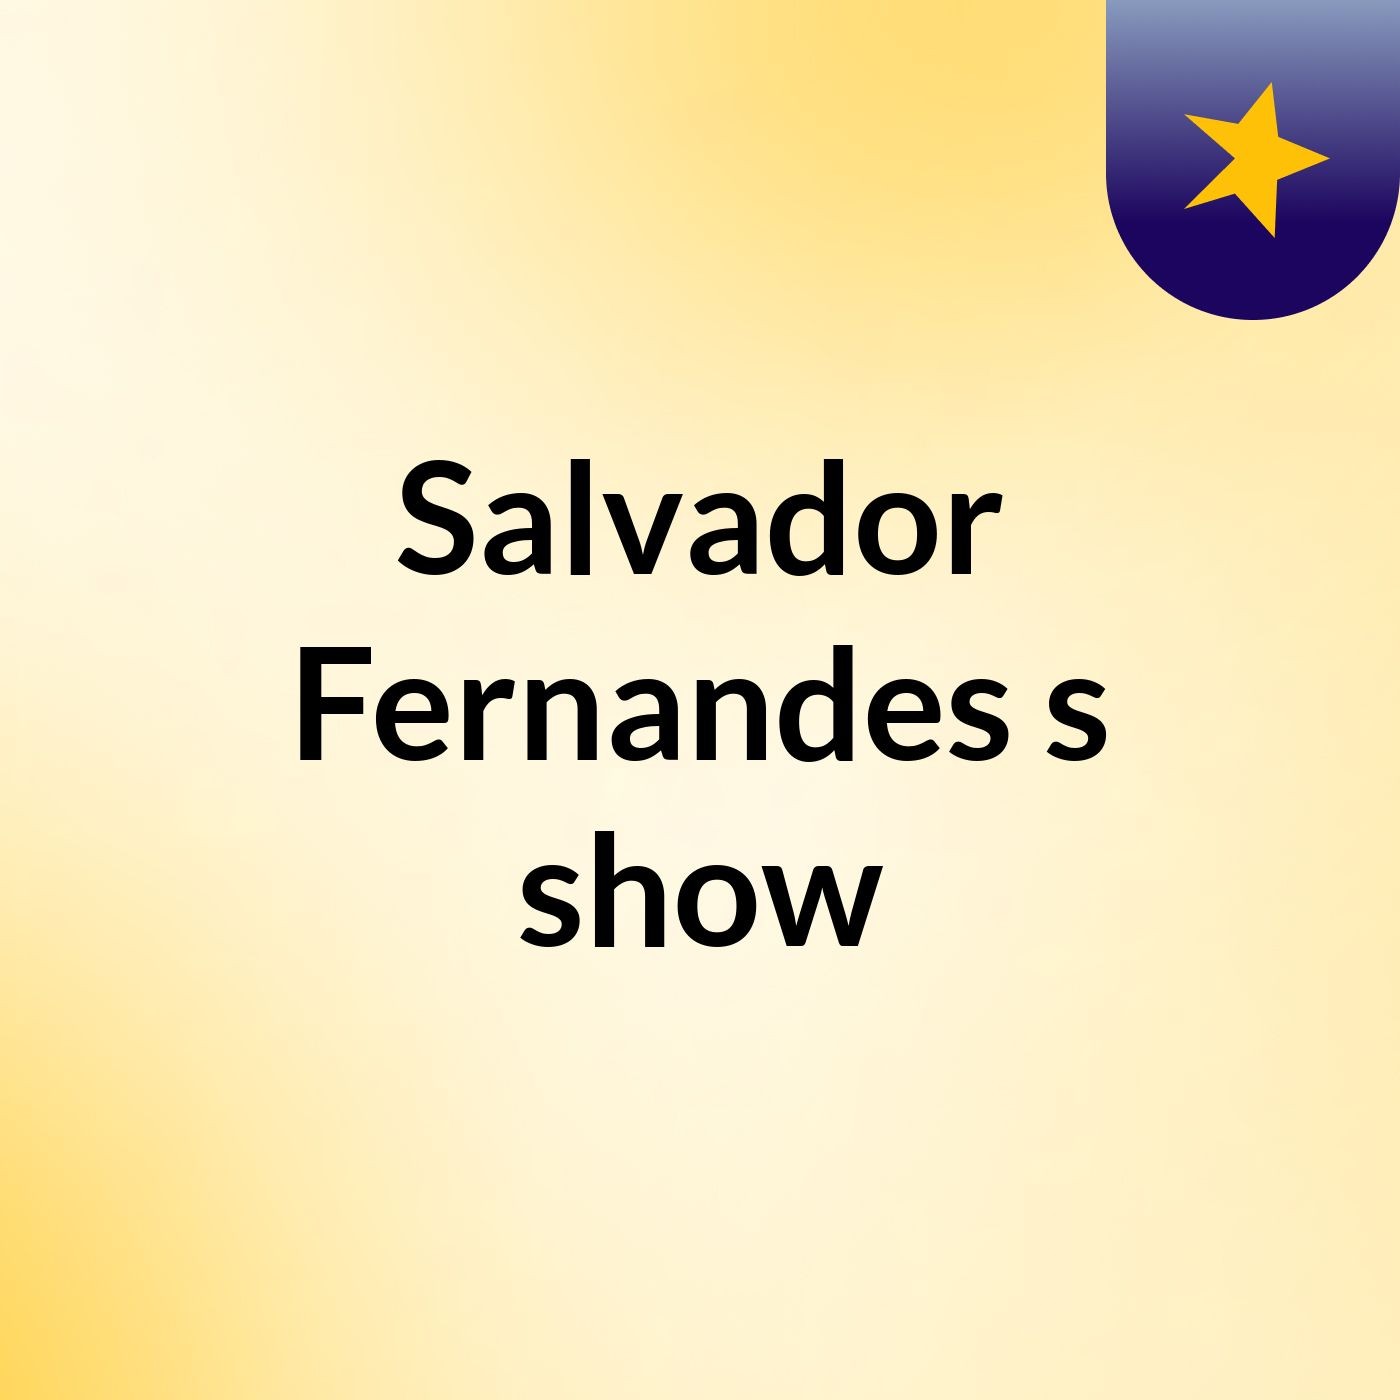 Salvador Fernandes's show